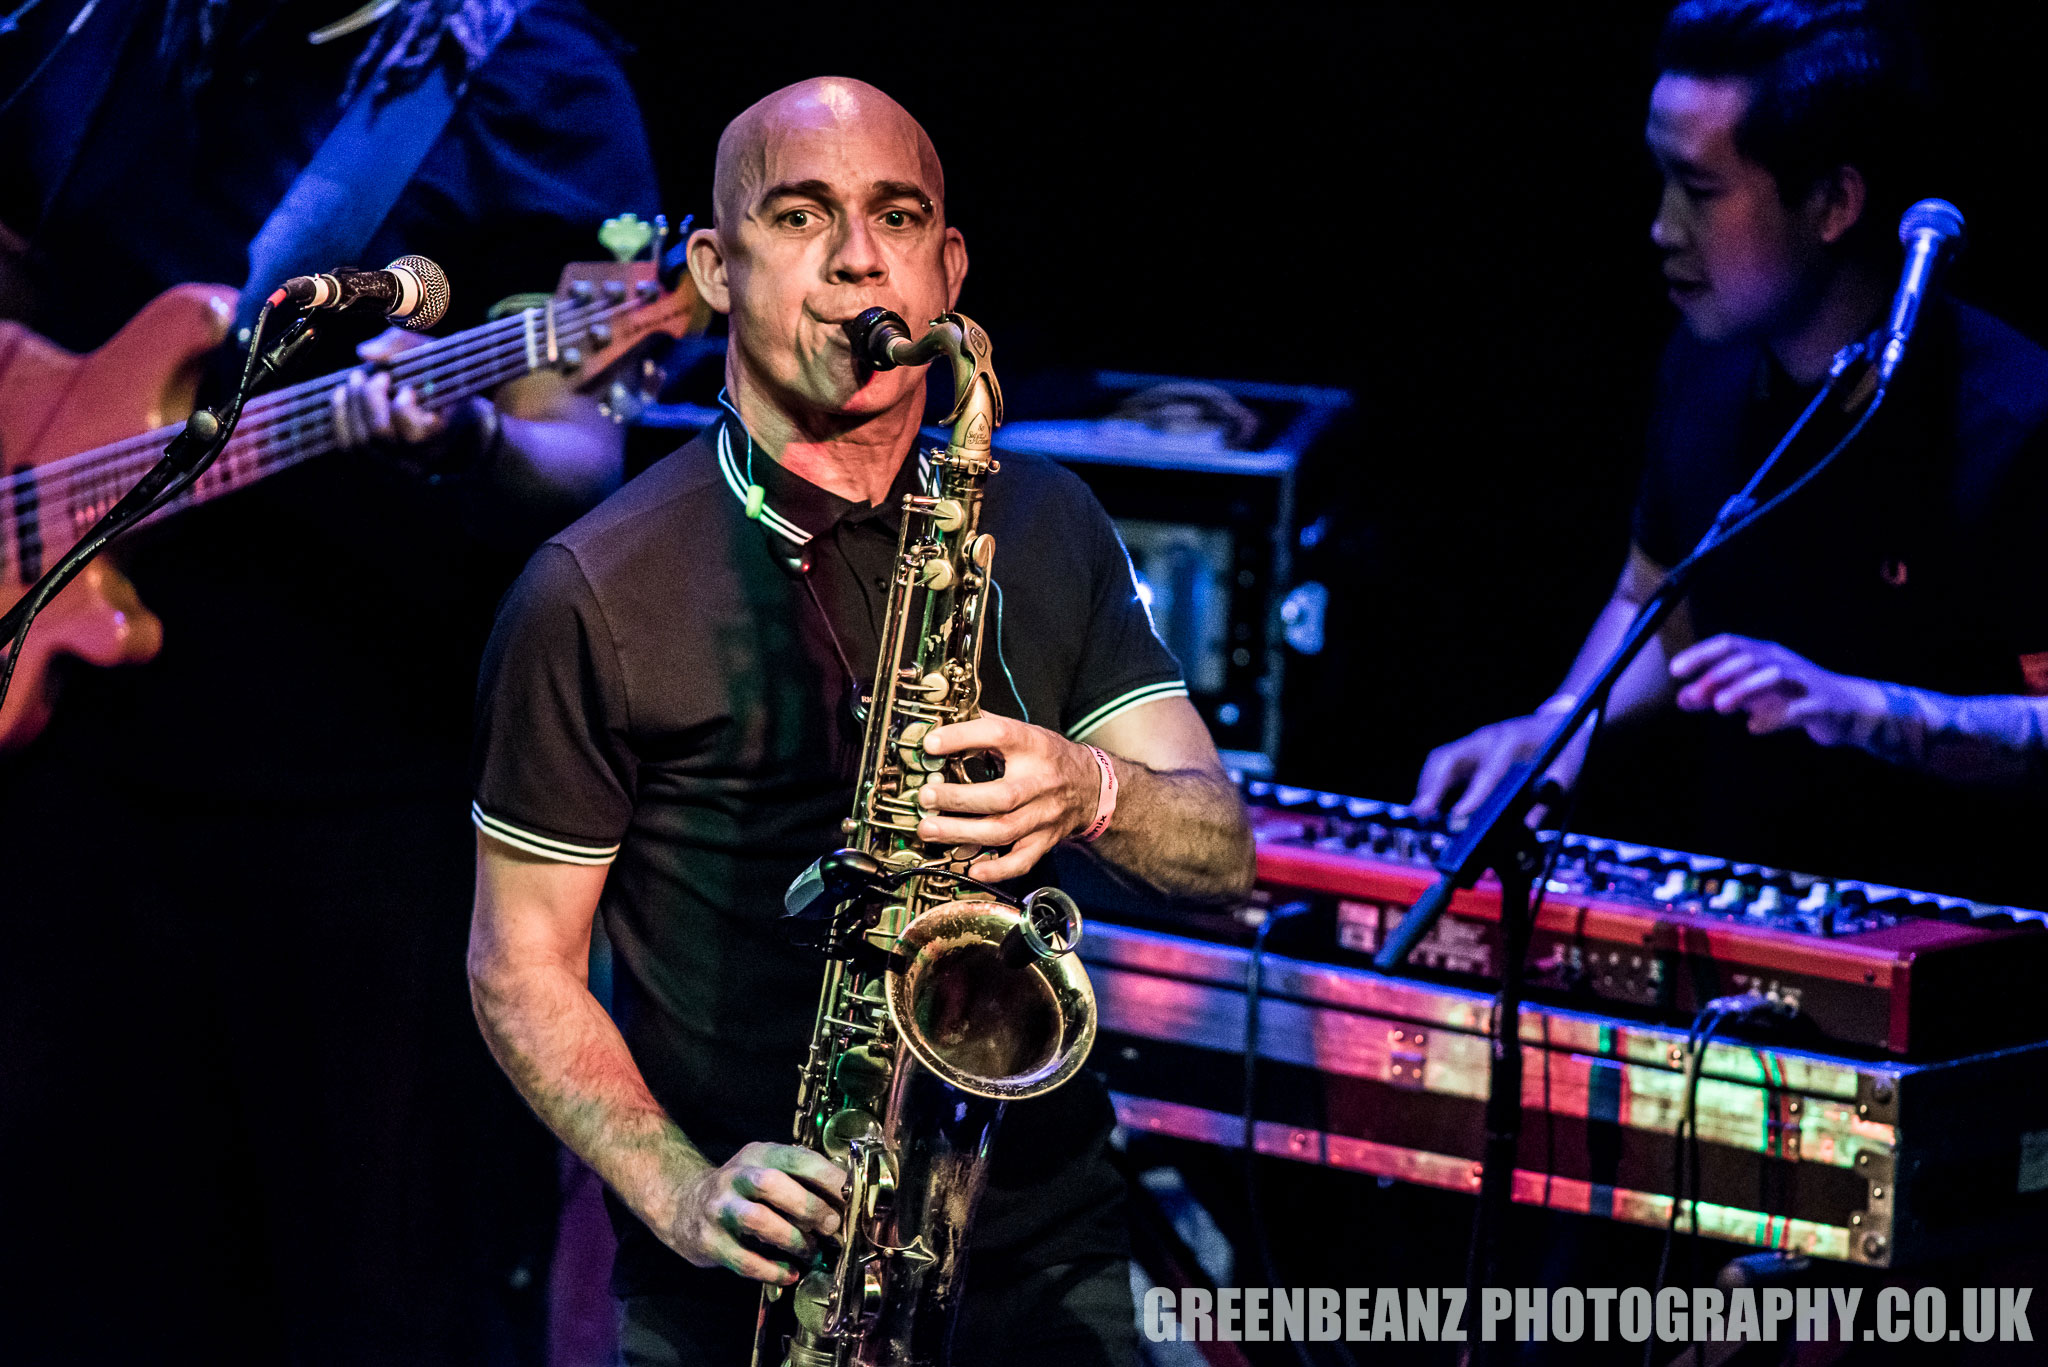 Matt Morrish Saxophone player with The Beat rocks Exeter Phoenix in 2018